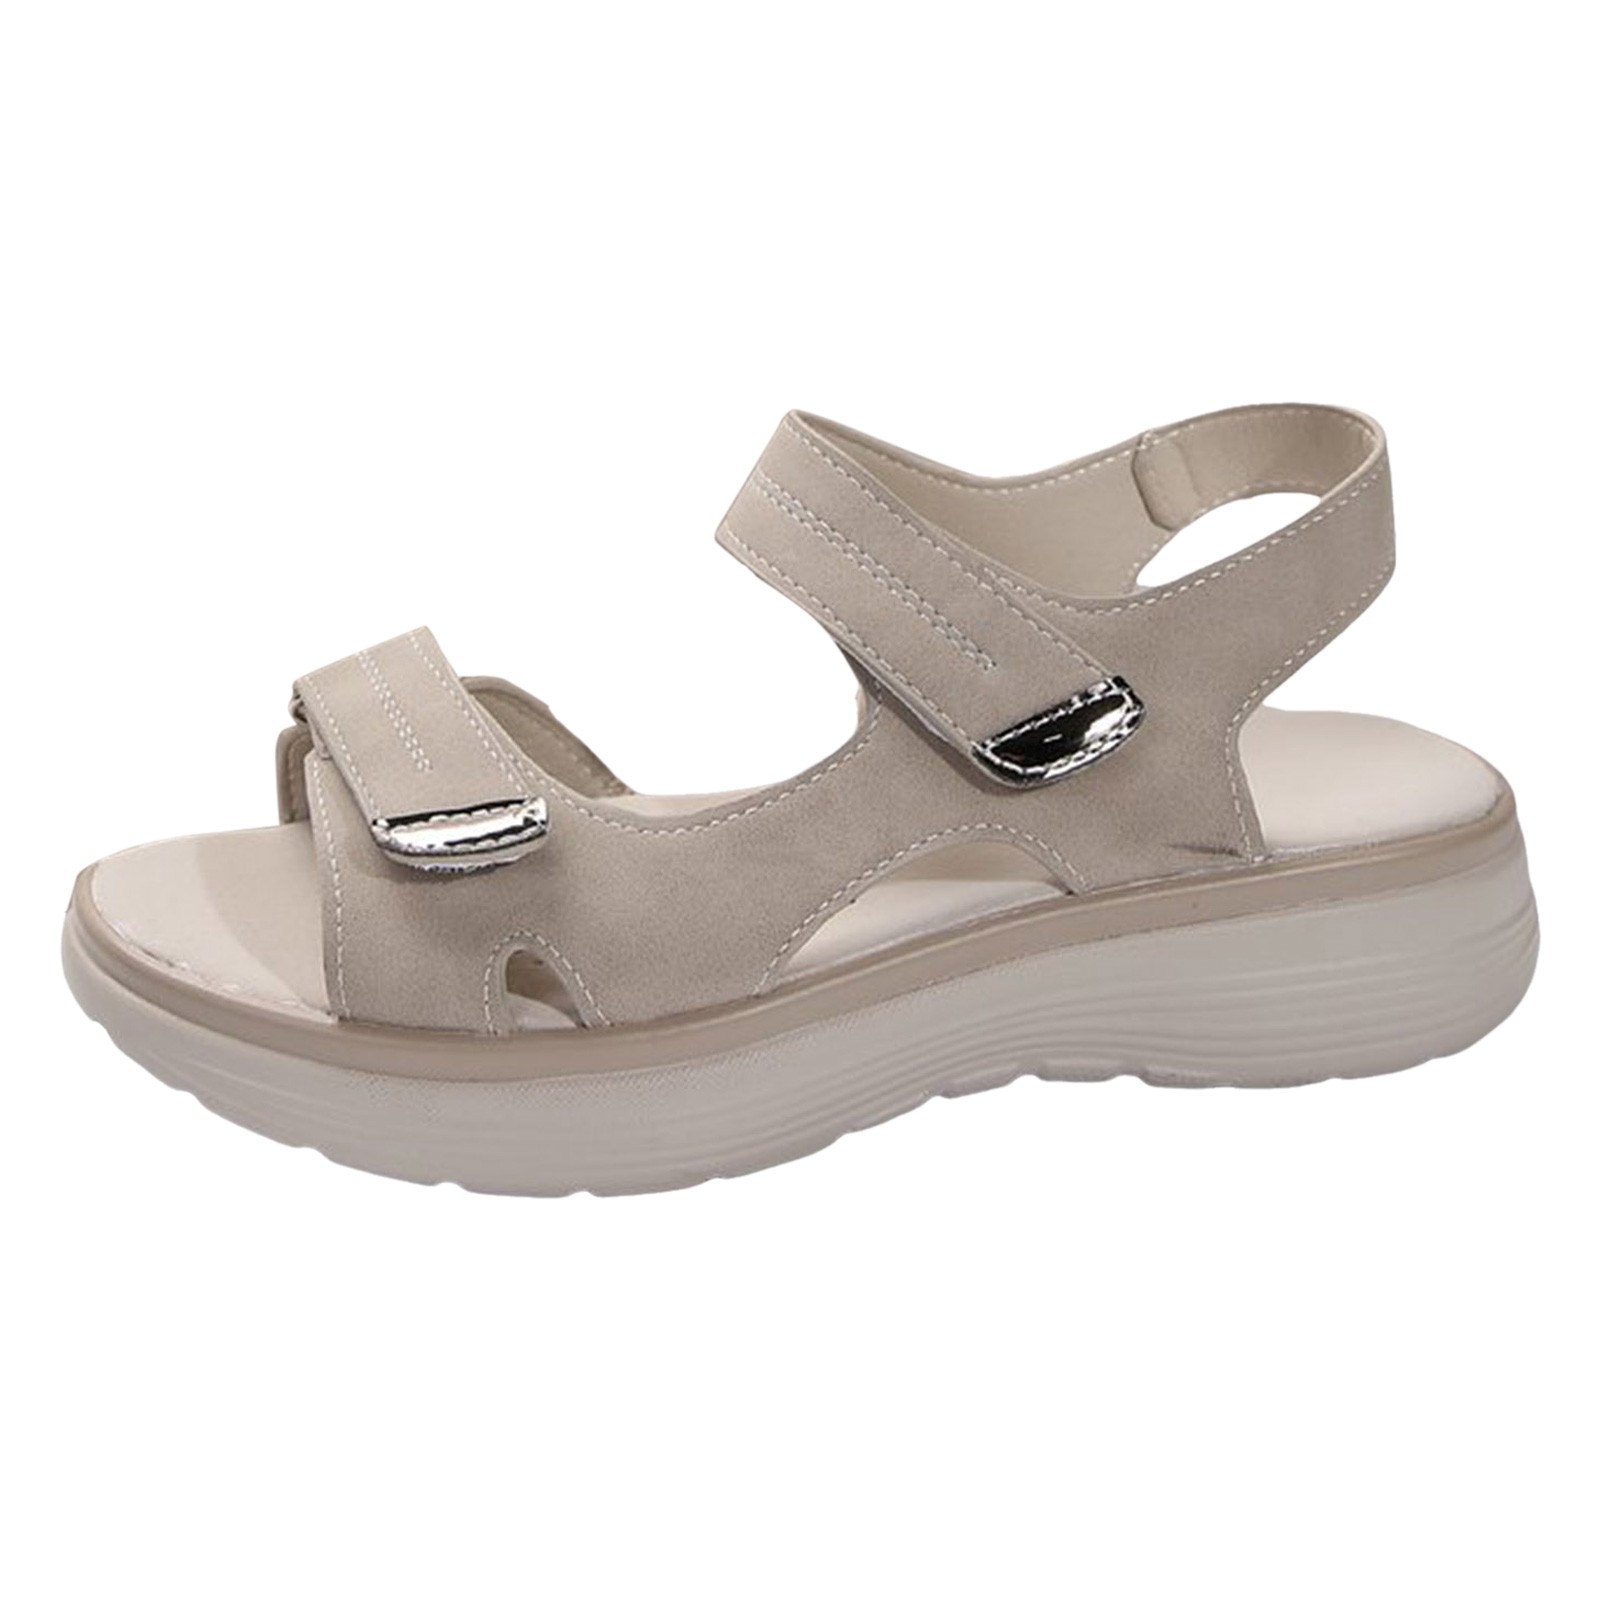 Blphud Comfort Sandals for Women Women Clip Toe Sandals Crystal Jelly ...